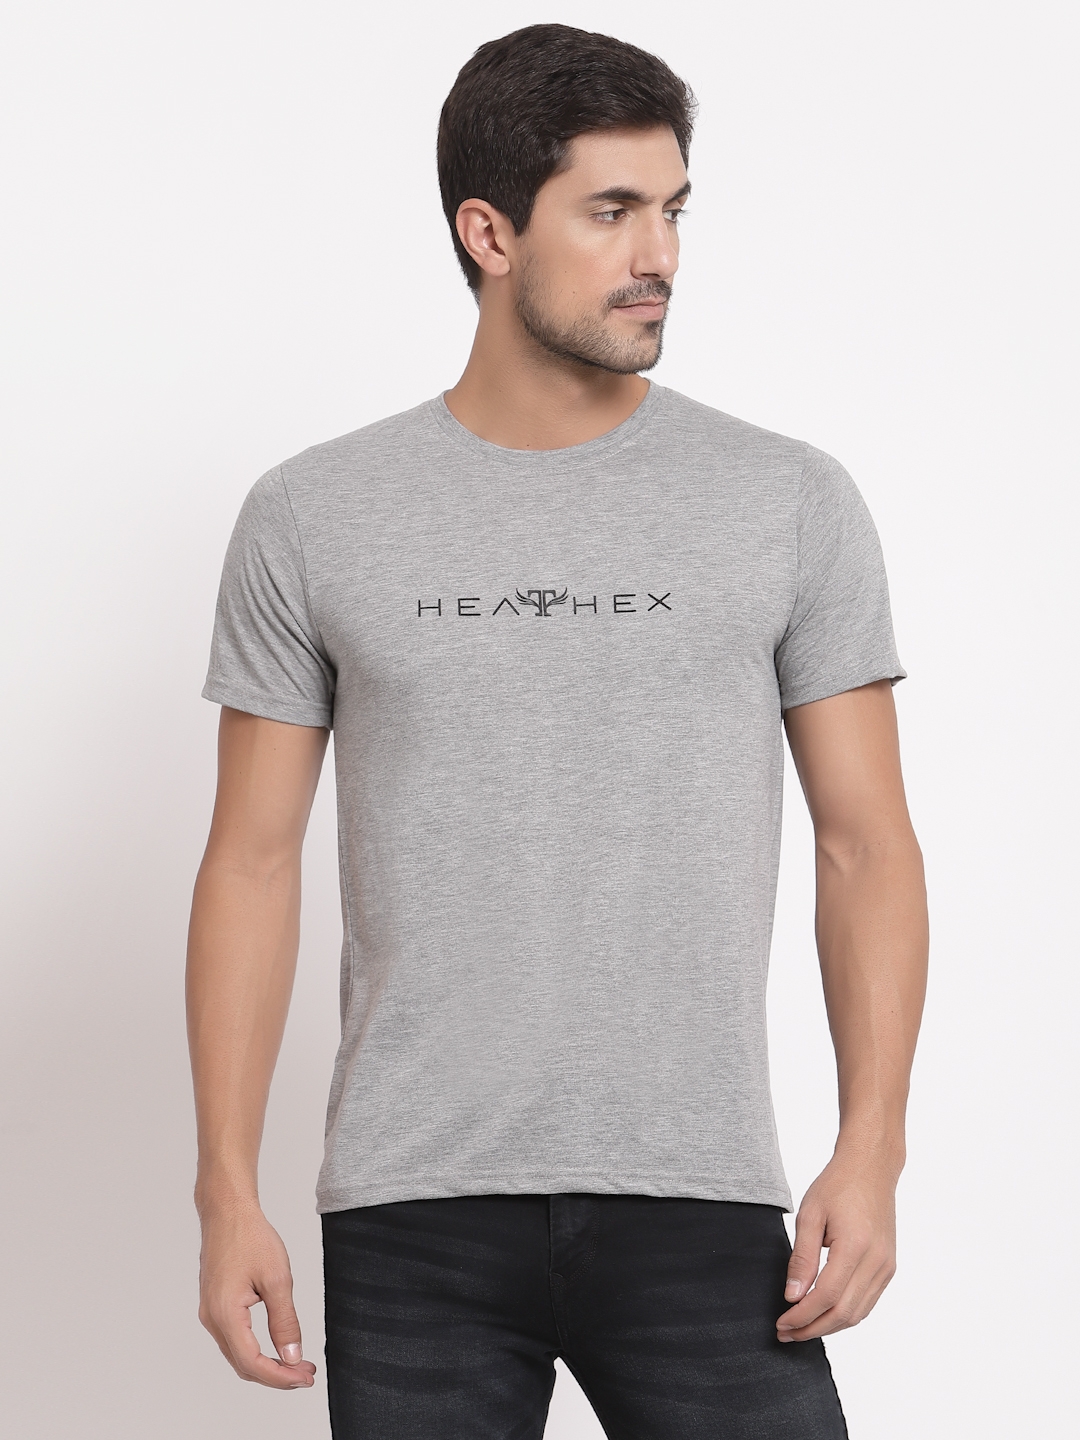 HEATHEX | HEATHEX Cotton Blend Printed Half Sleeve Light Grey T-Shirt for Men